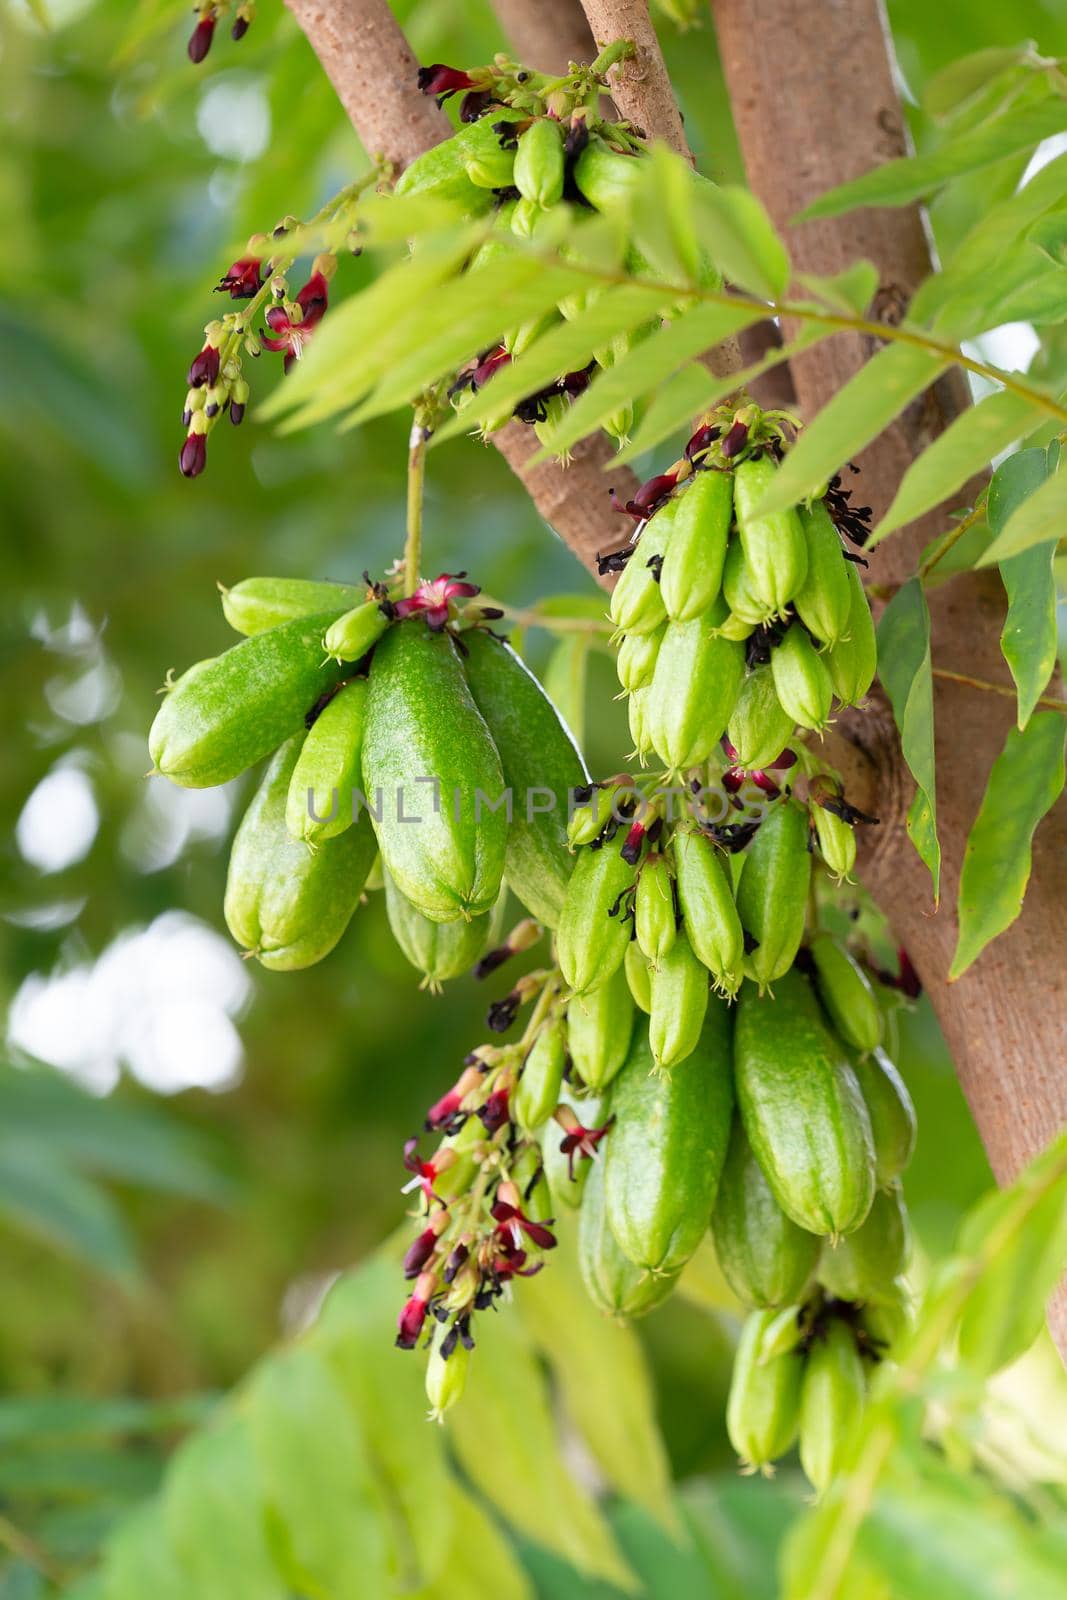 Bilimbi fruit on tree by smuay